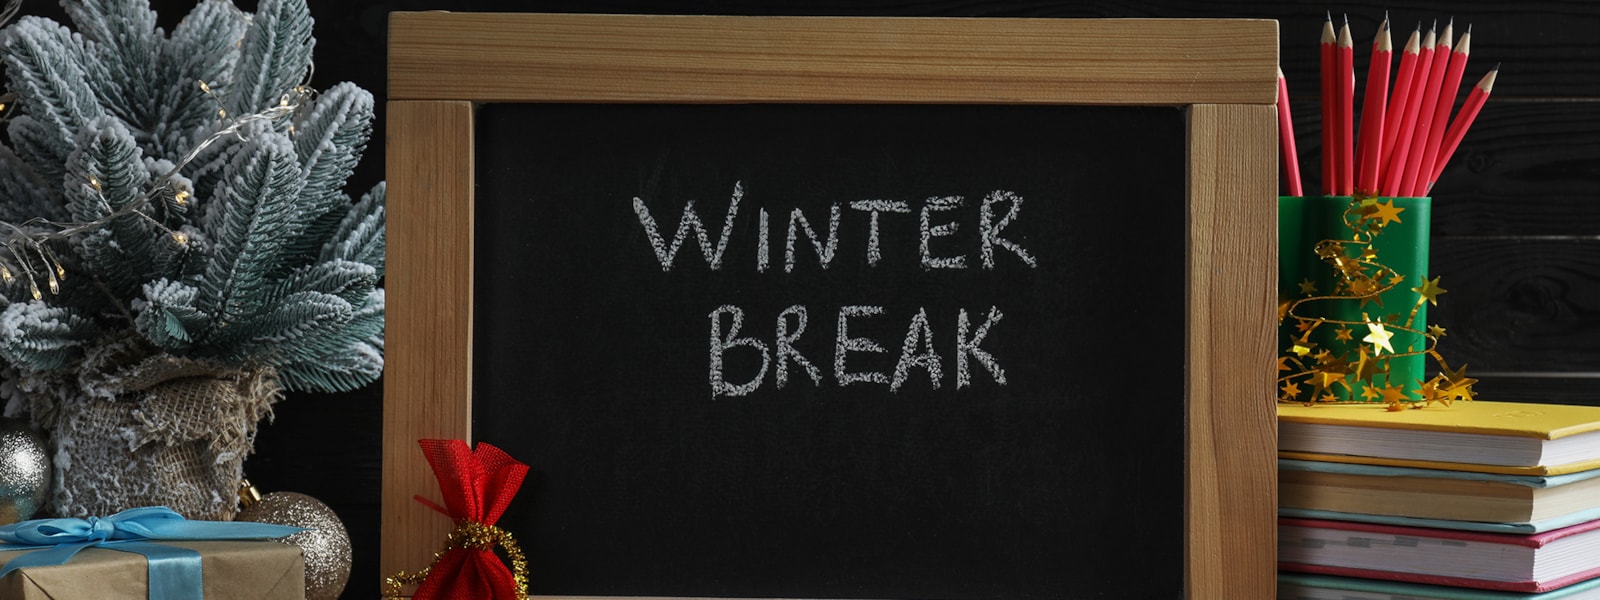 Winter Break written on a chalkboard with books, pencils, pine tree, and present